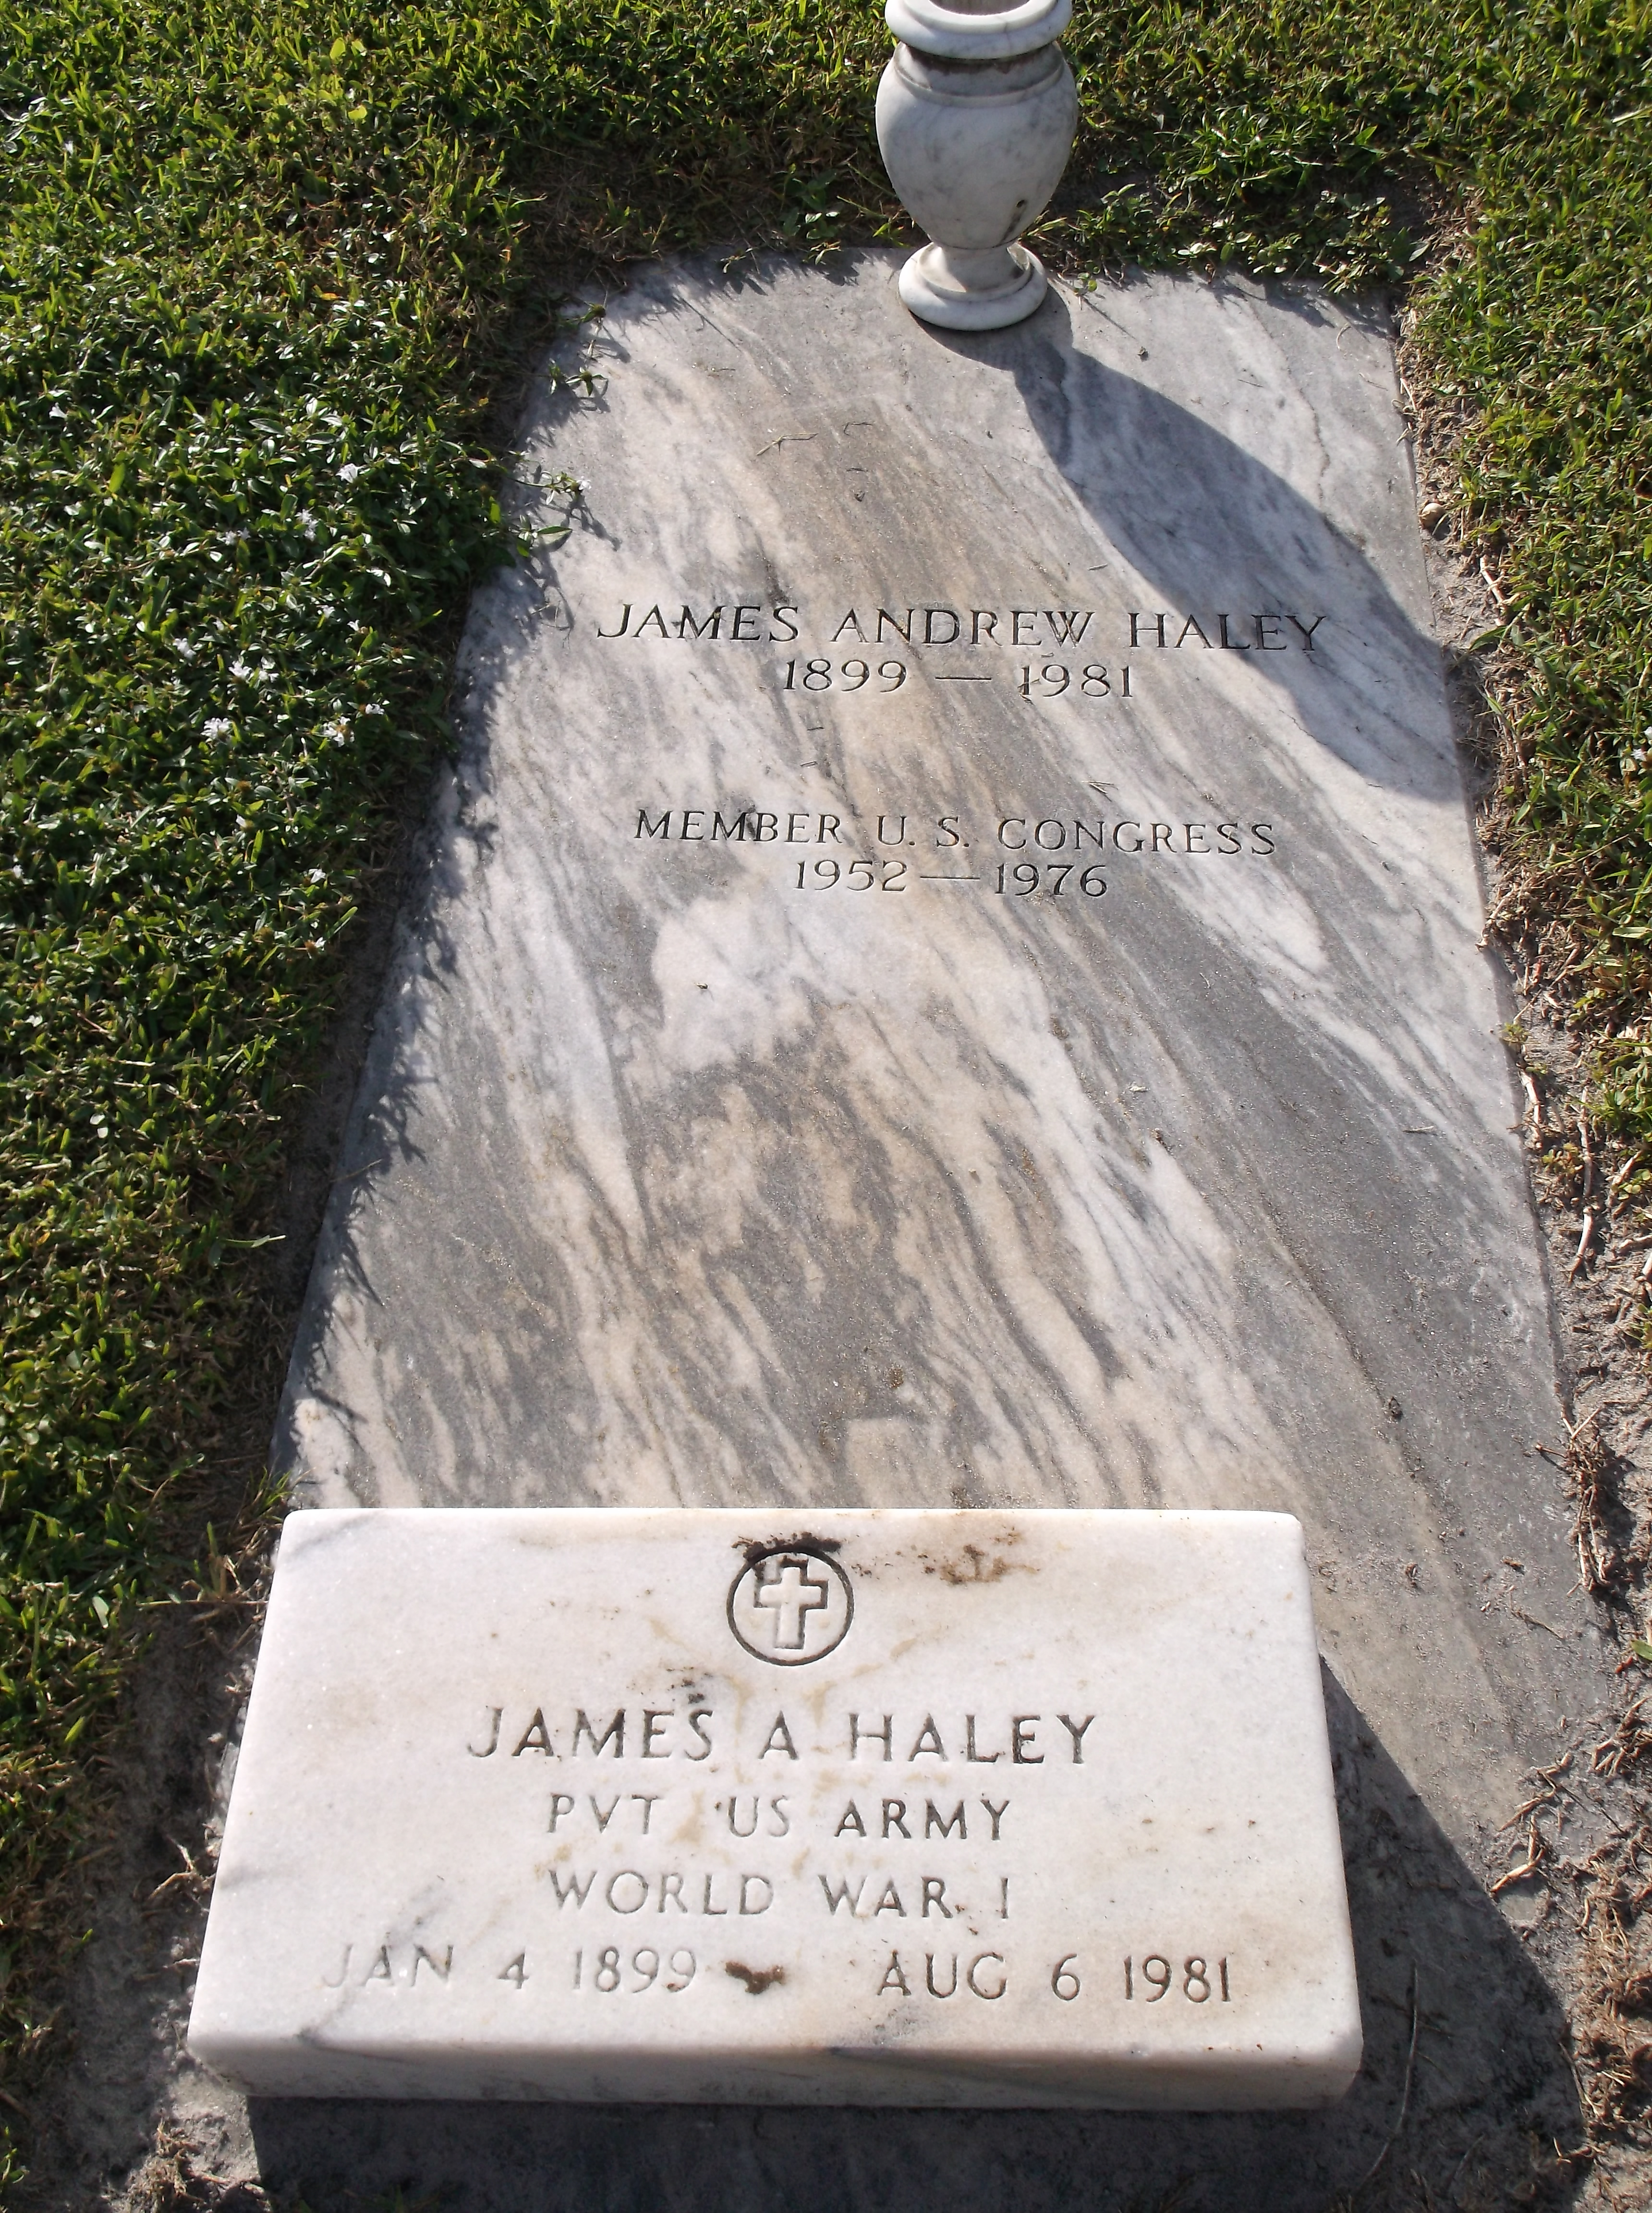 James Andrew Haley